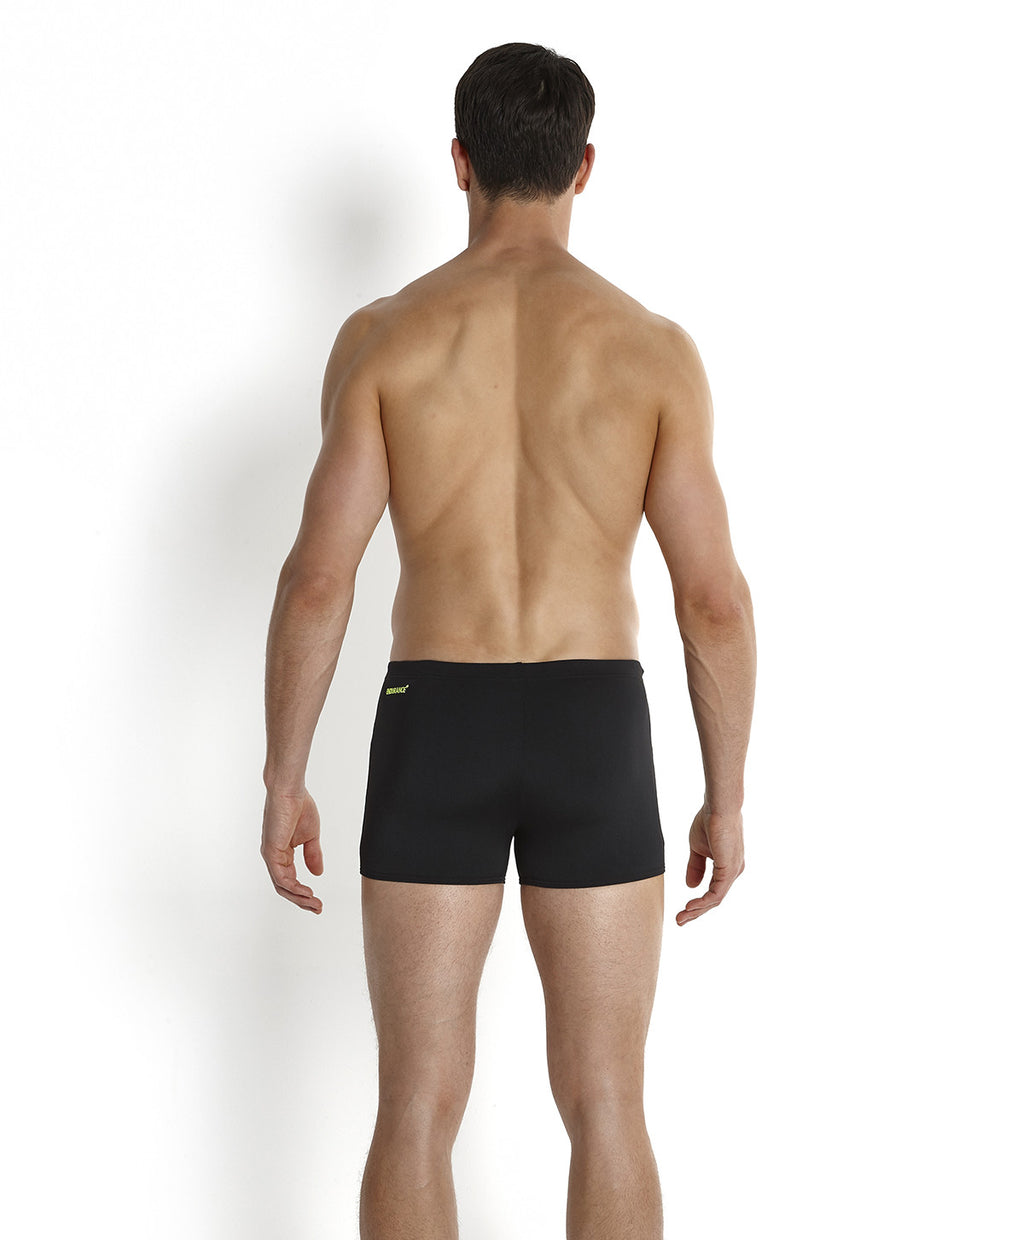 The Beach Company India - Buy mens swimming shorts online - Speedo swim trunks for boys